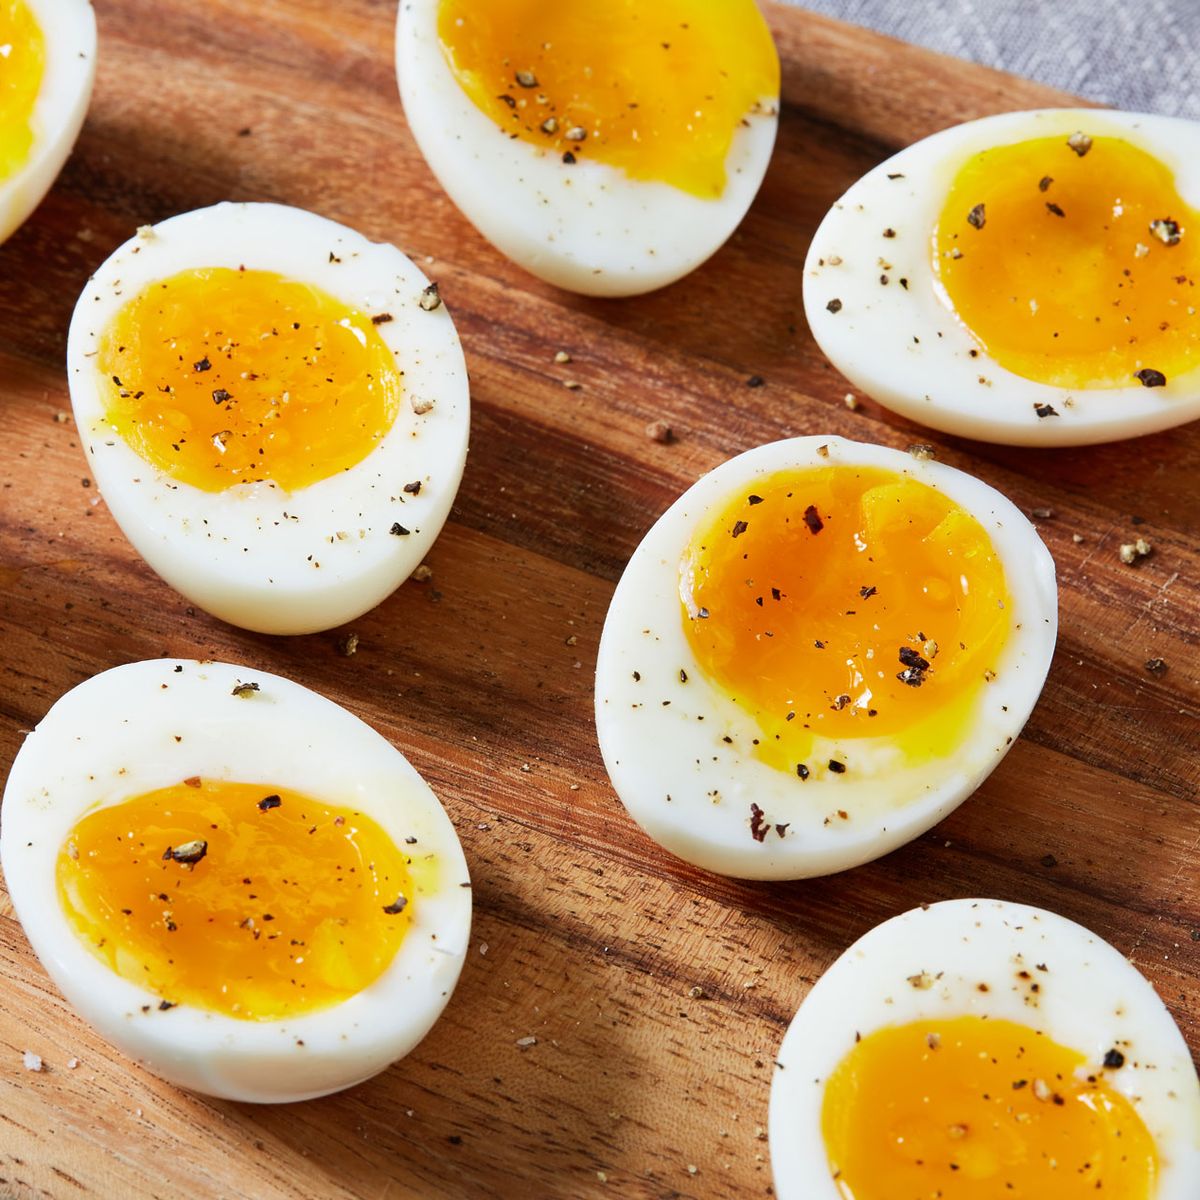 Soft boiled eggs recipe